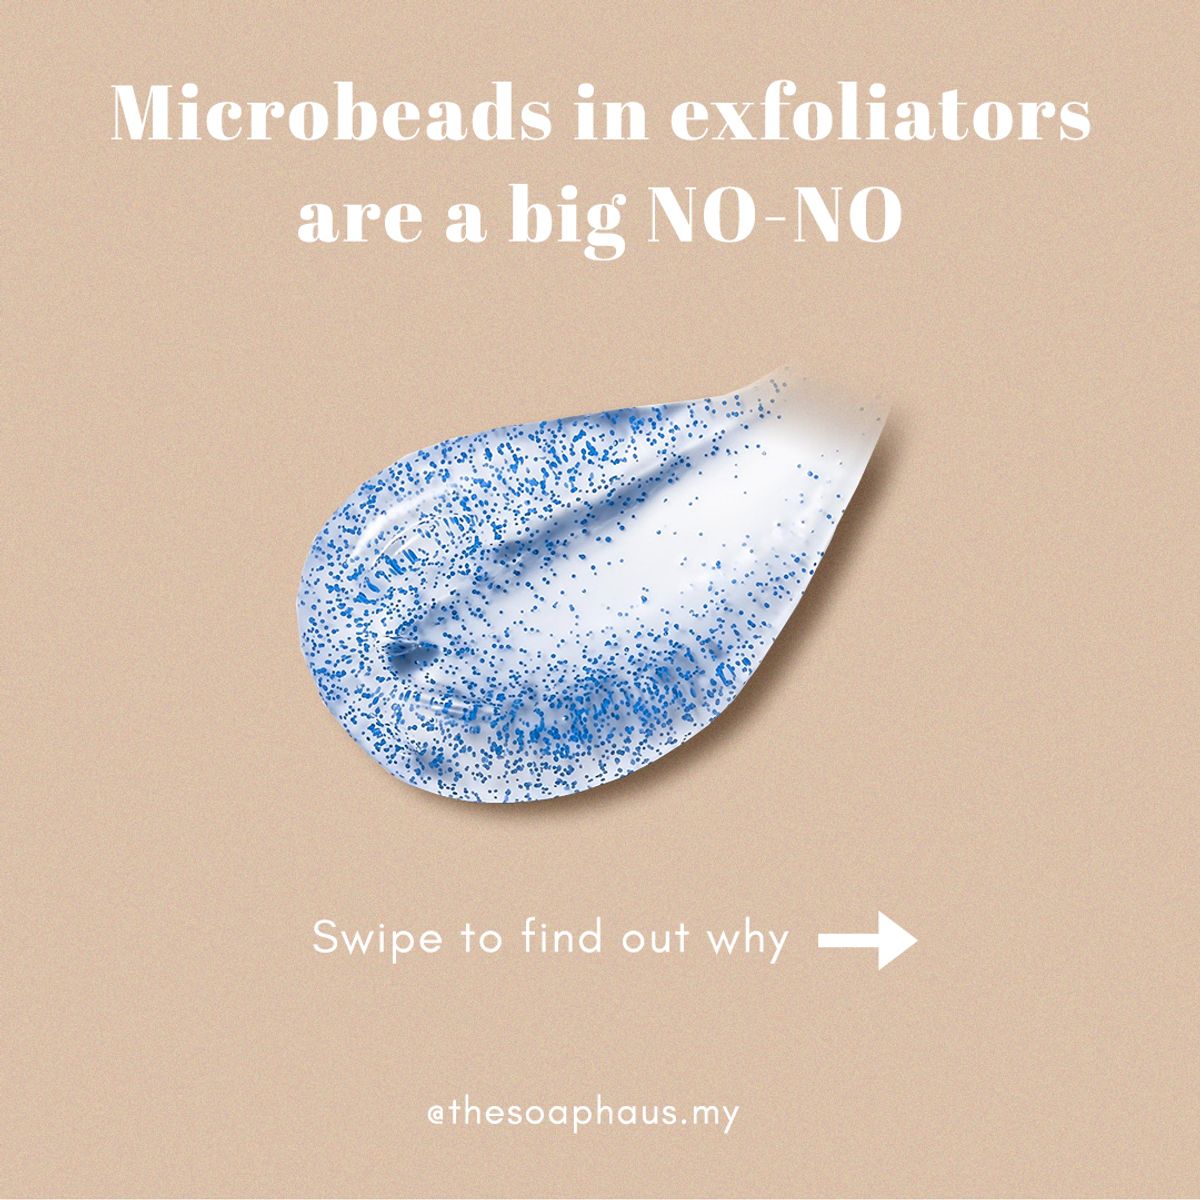 Microbeads in exfoliators are a big NO-NO